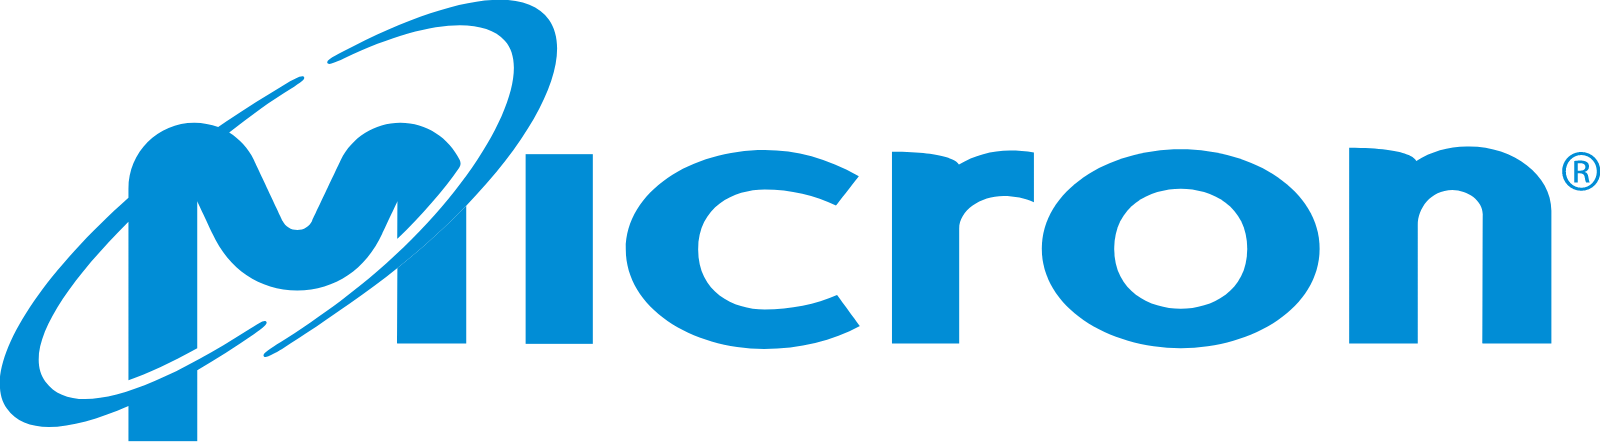 Micron Technology logo large (transparent PNG)